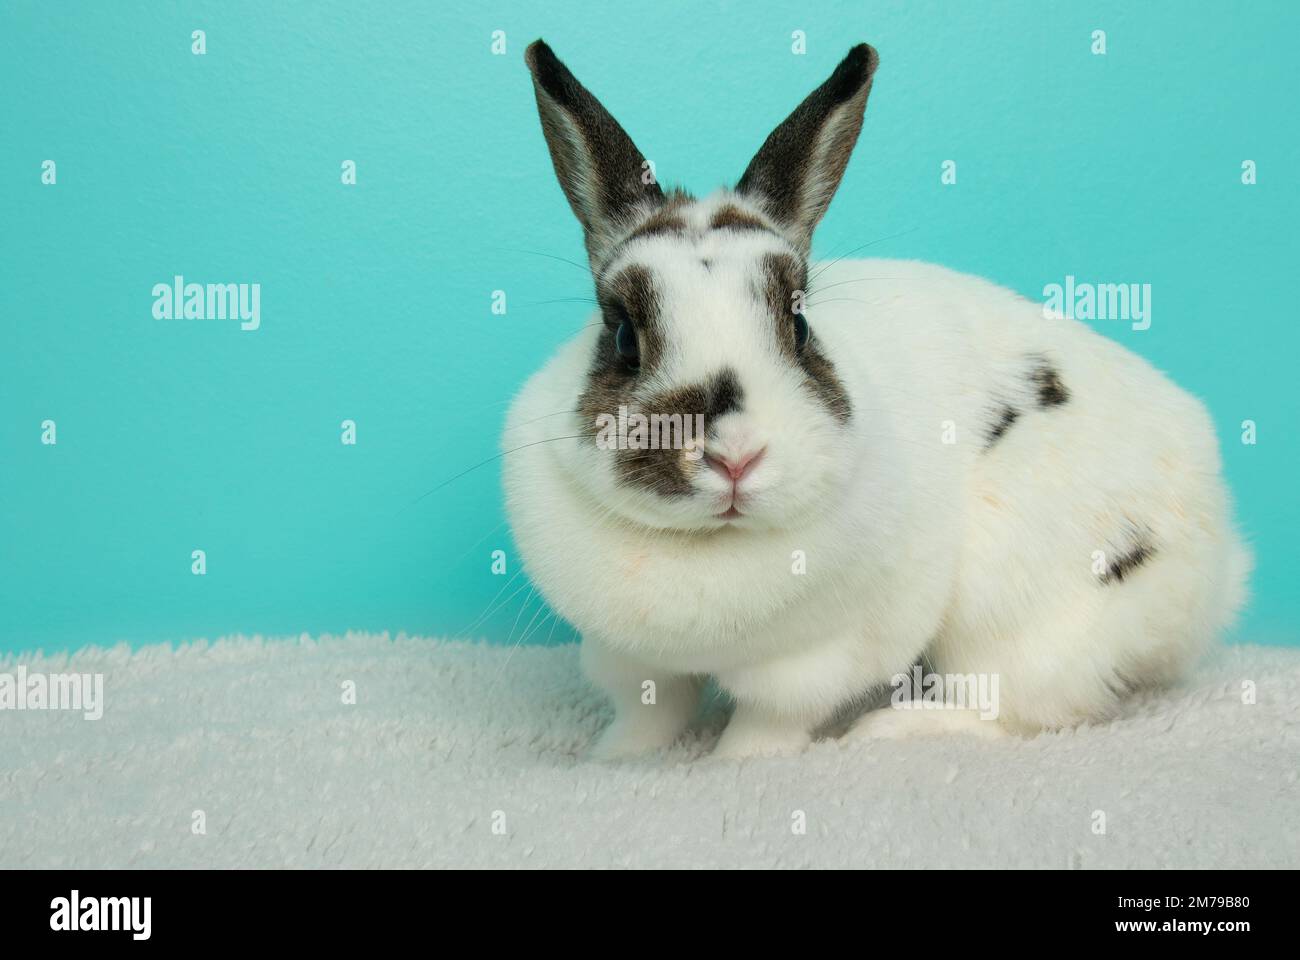 cute brown black and white bunny rabbit portrait Stock Photo